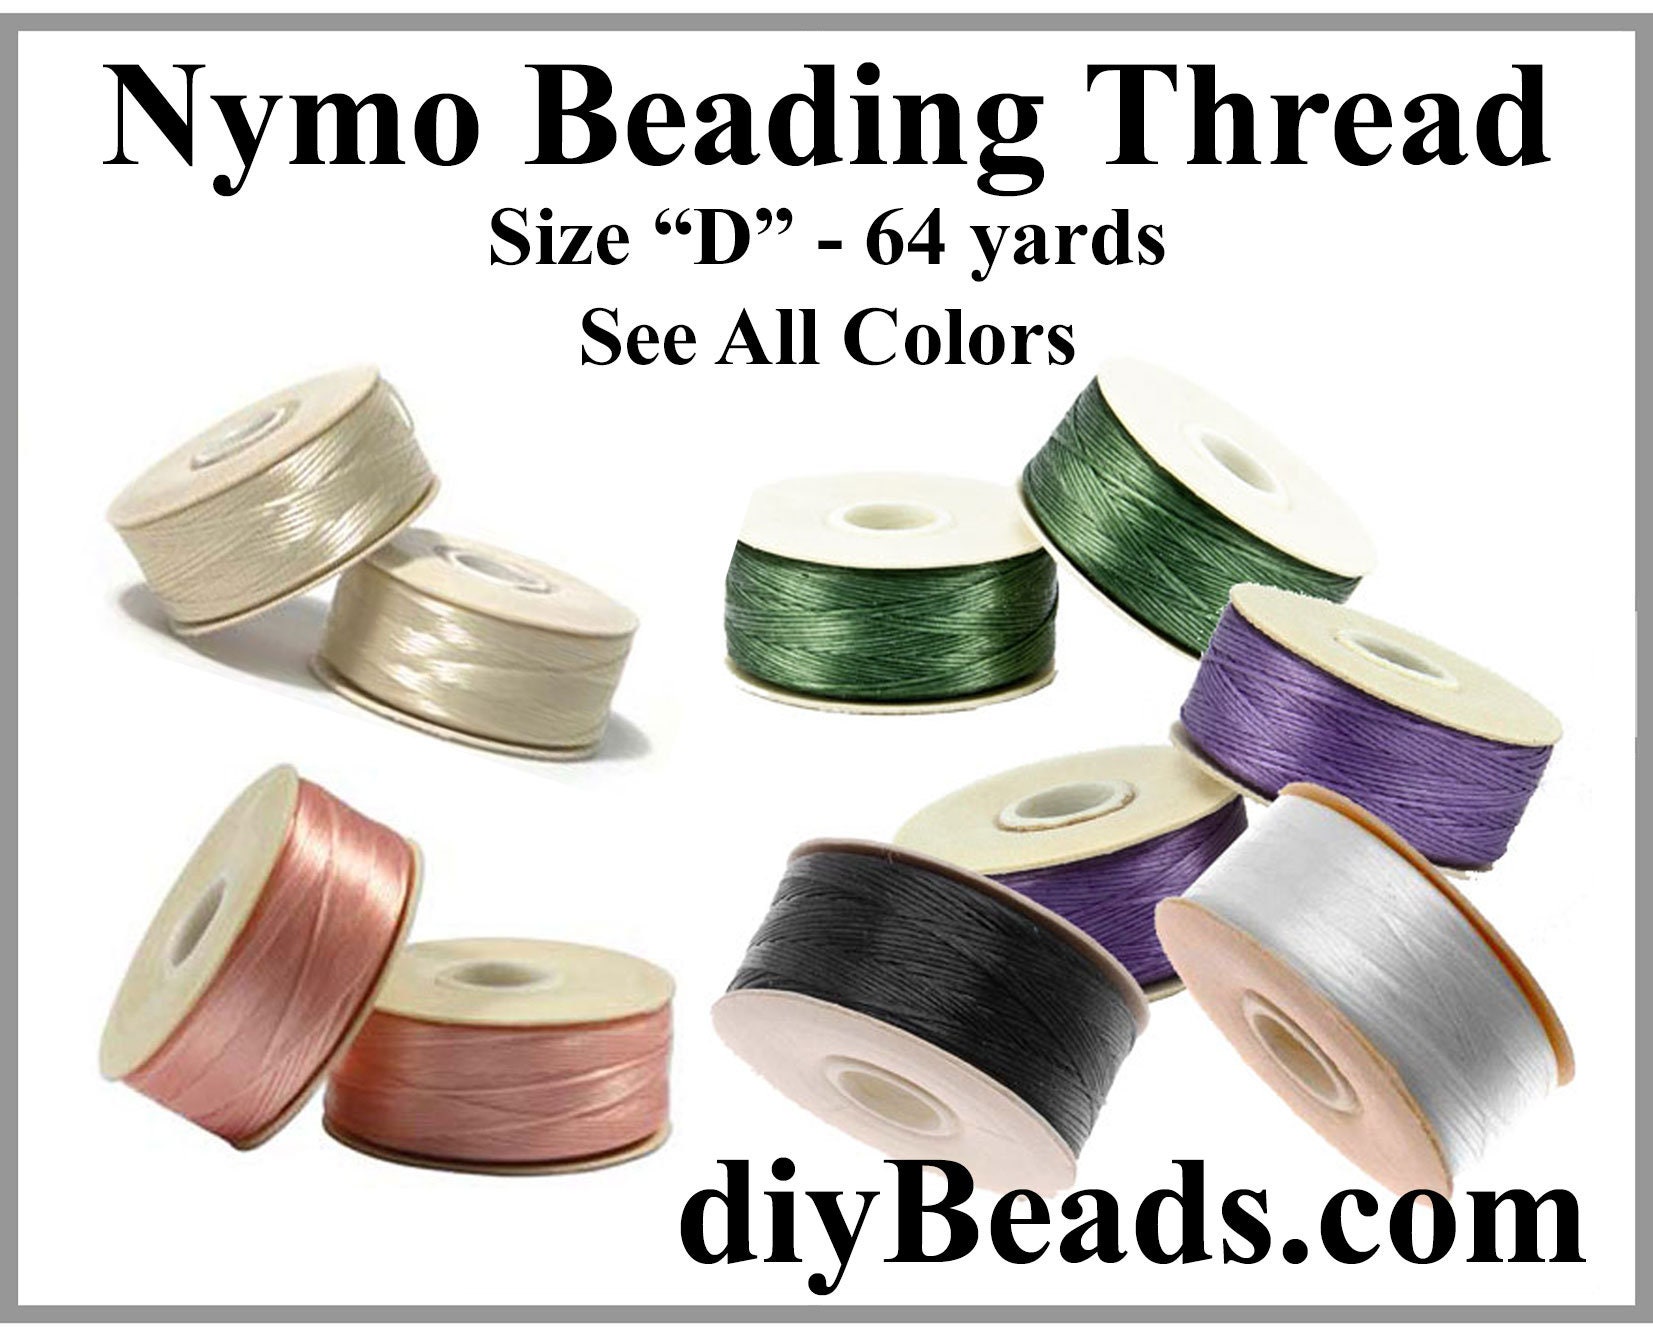 Nymo Nylon Beading Thread Size D for Delica Beads, Turquoise, Dark Blue & Silver, 3 Bobbin Set, 64 Yards Each